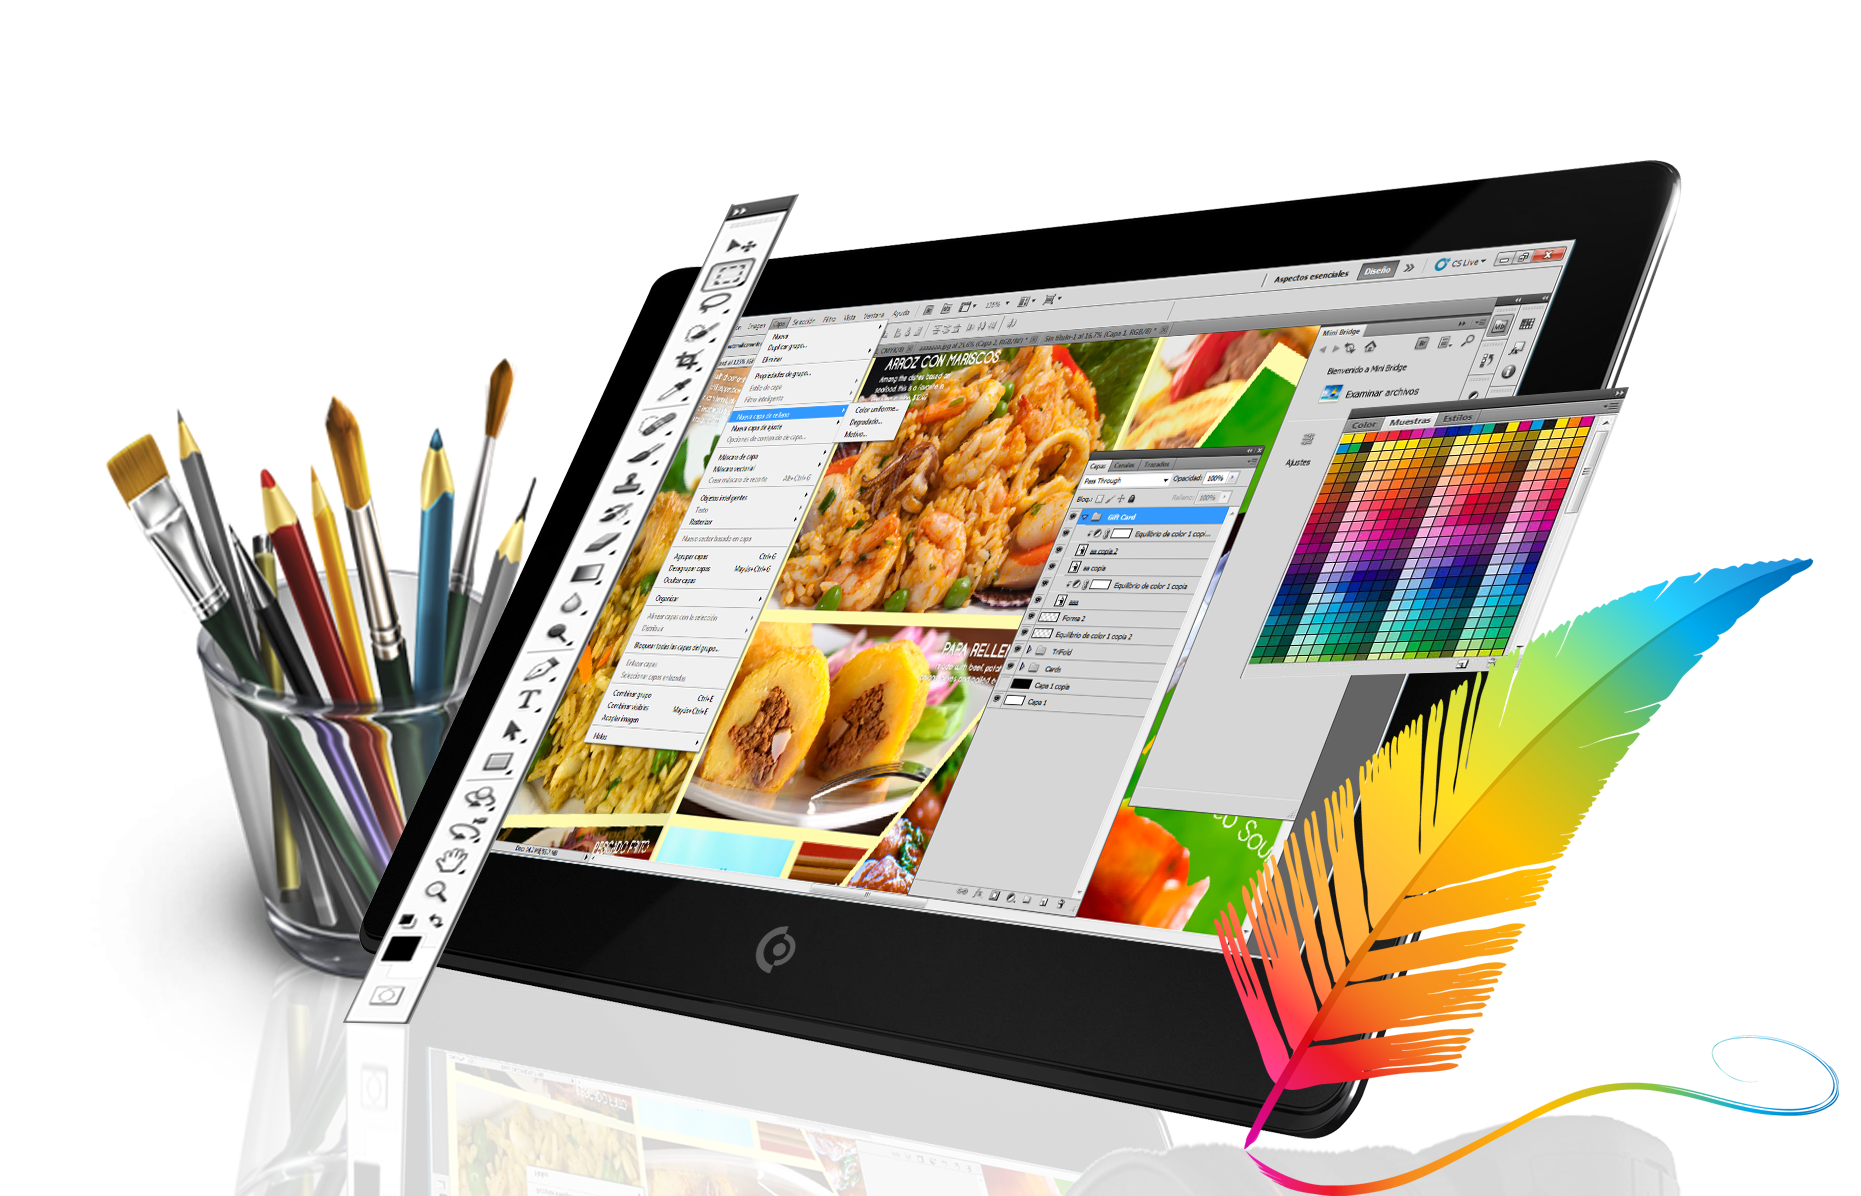 top 10 free graphic design softwars